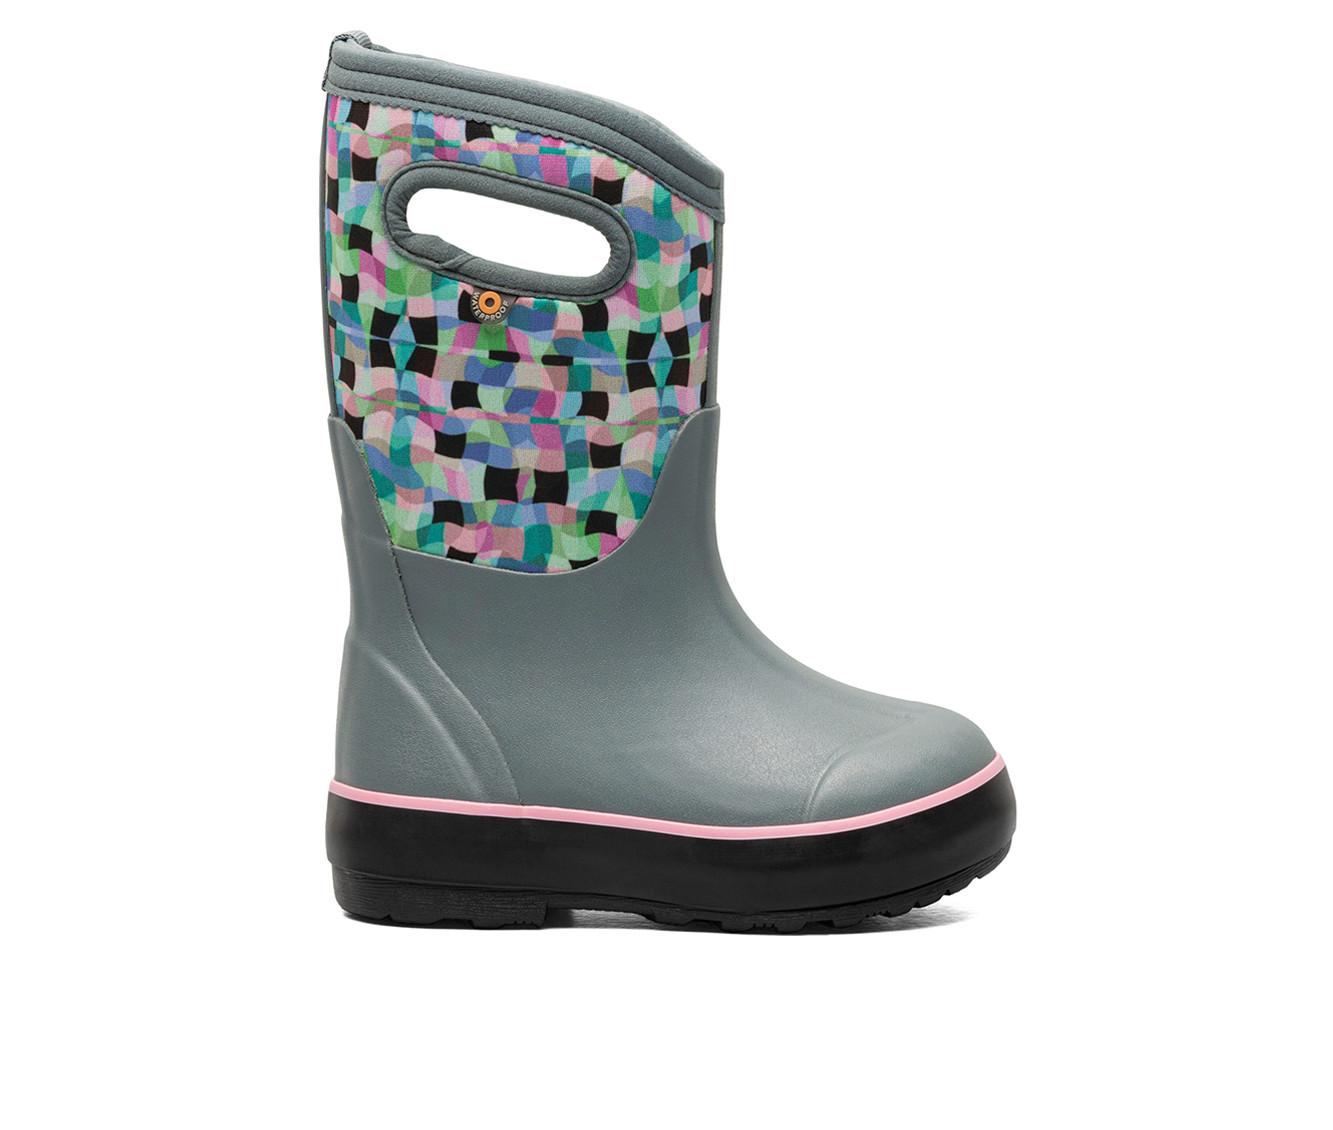 Girls' Bogs Footwear Toddler & Little Kid Classic II Checkered Geo Winter Boots